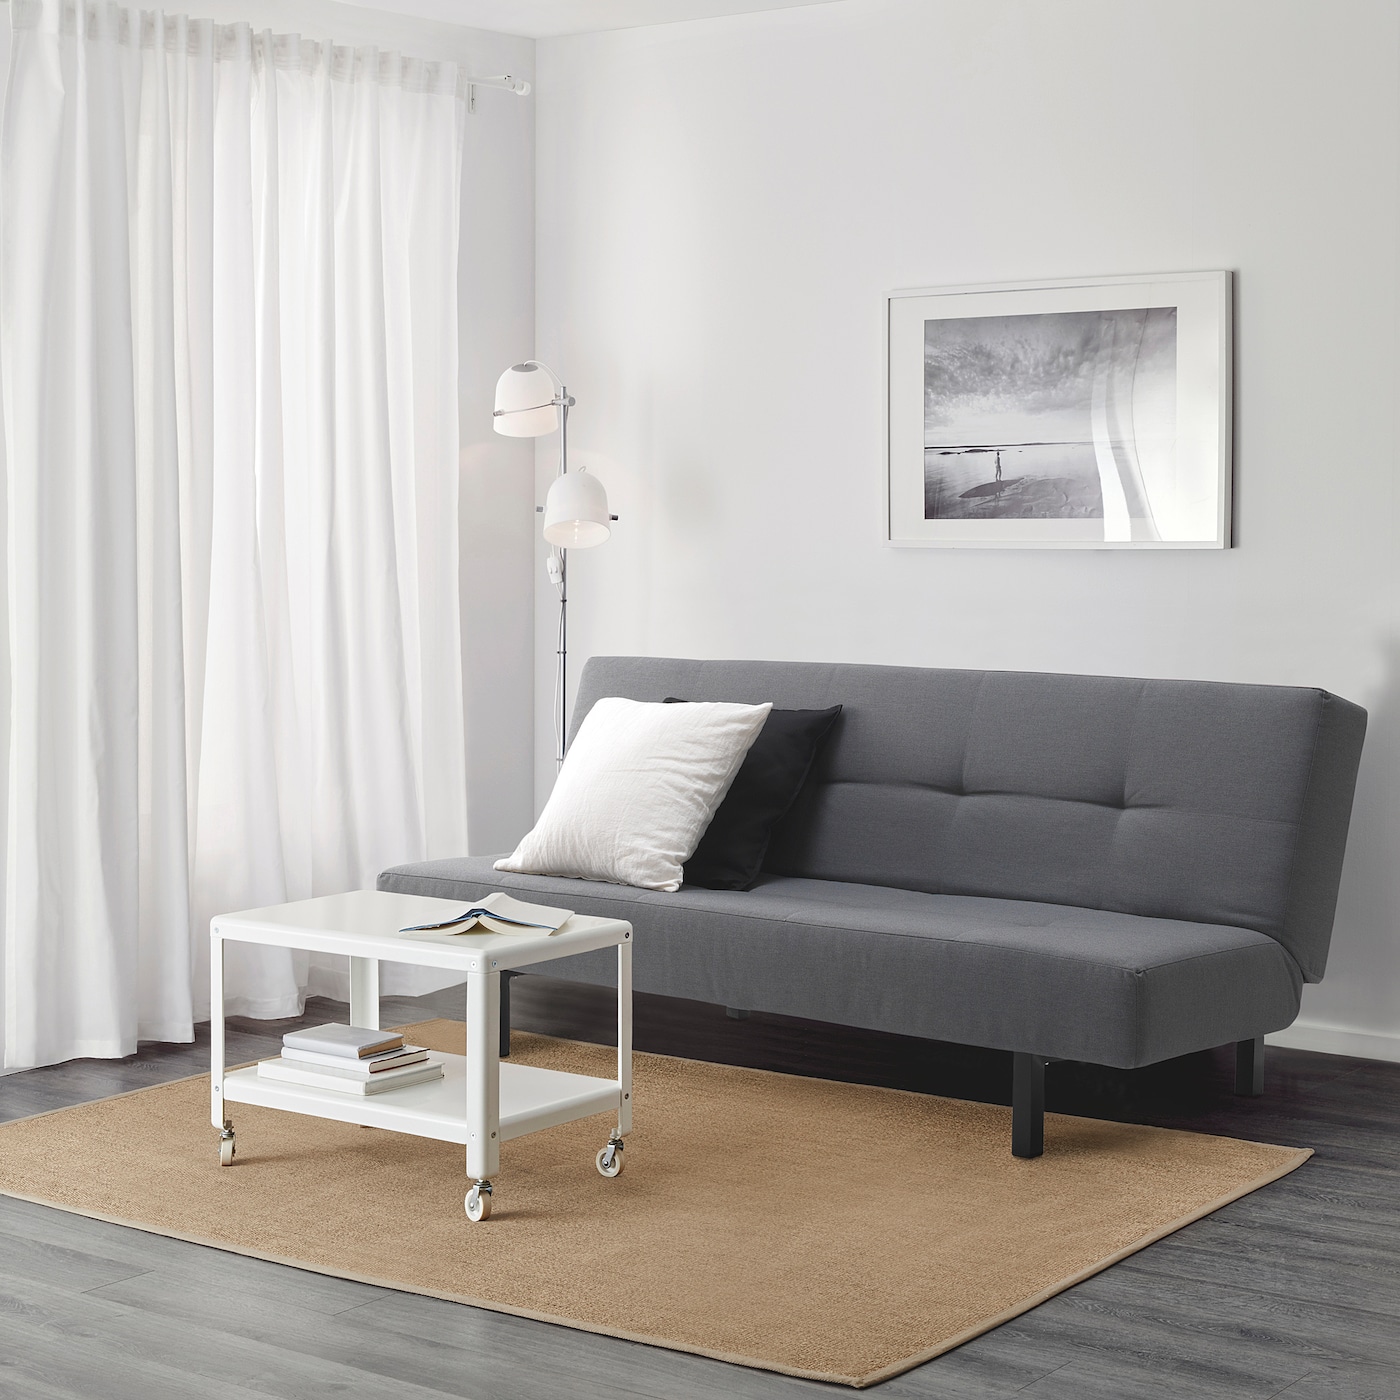 Grey-sofa-bed-from-IKEA-39976